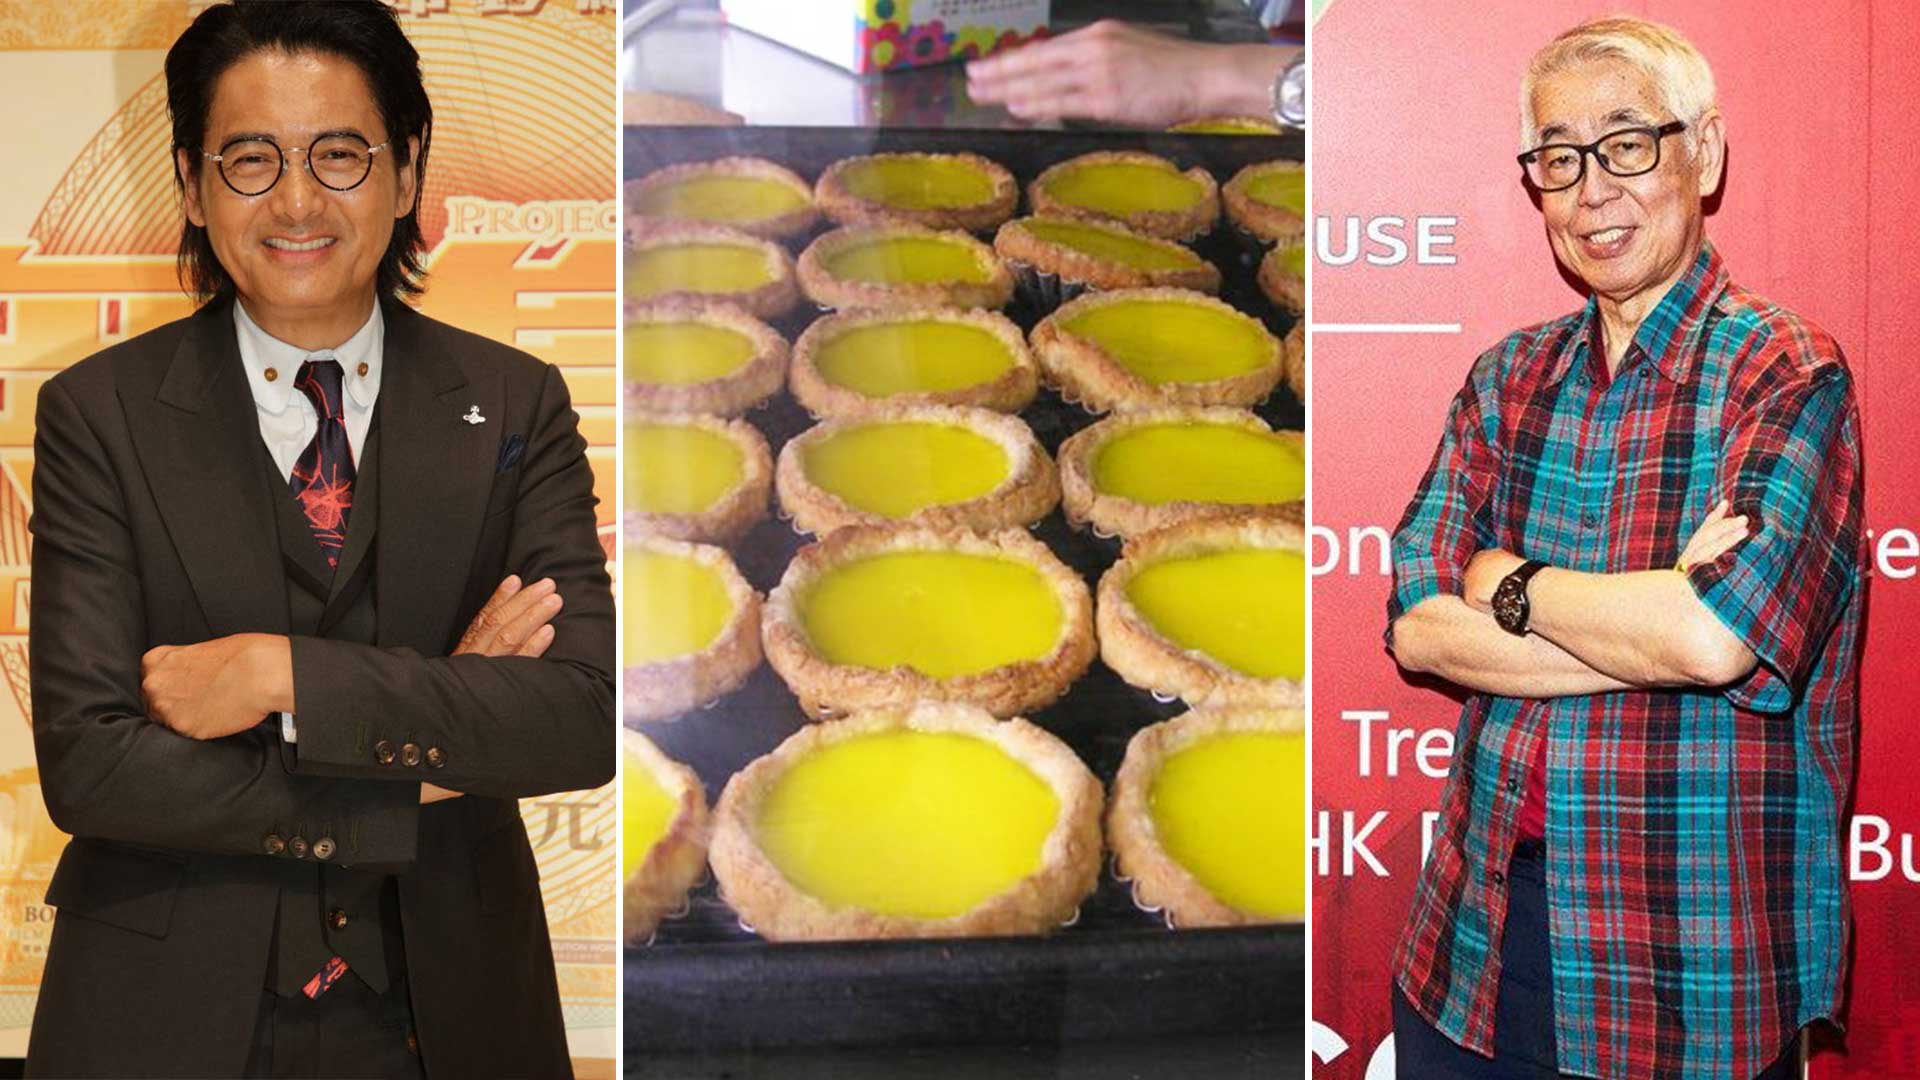 HK TVB producer Robert Chua Opening S’pore Shop Selling Chow Yun Fat’s Fave Egg Tarts